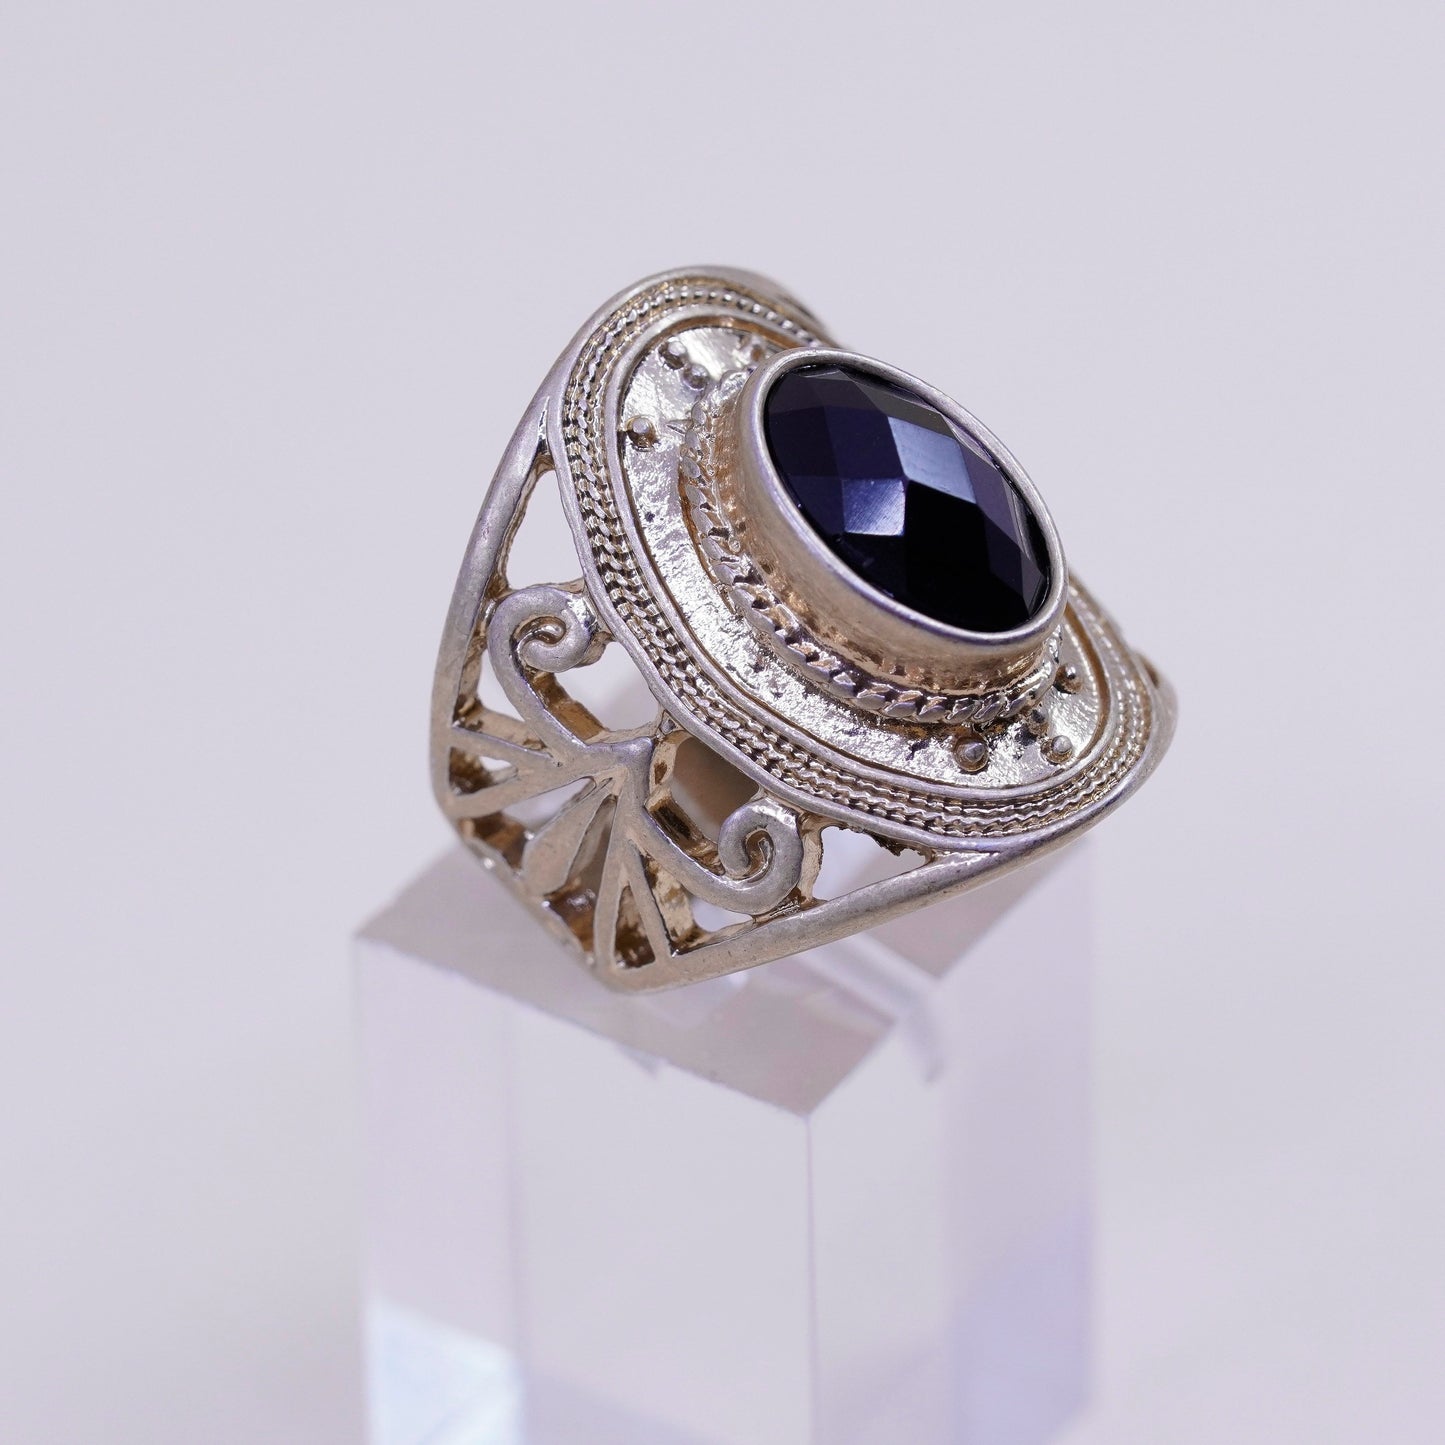 Size 7, vintage modern gold tone brass ring w/ black stone